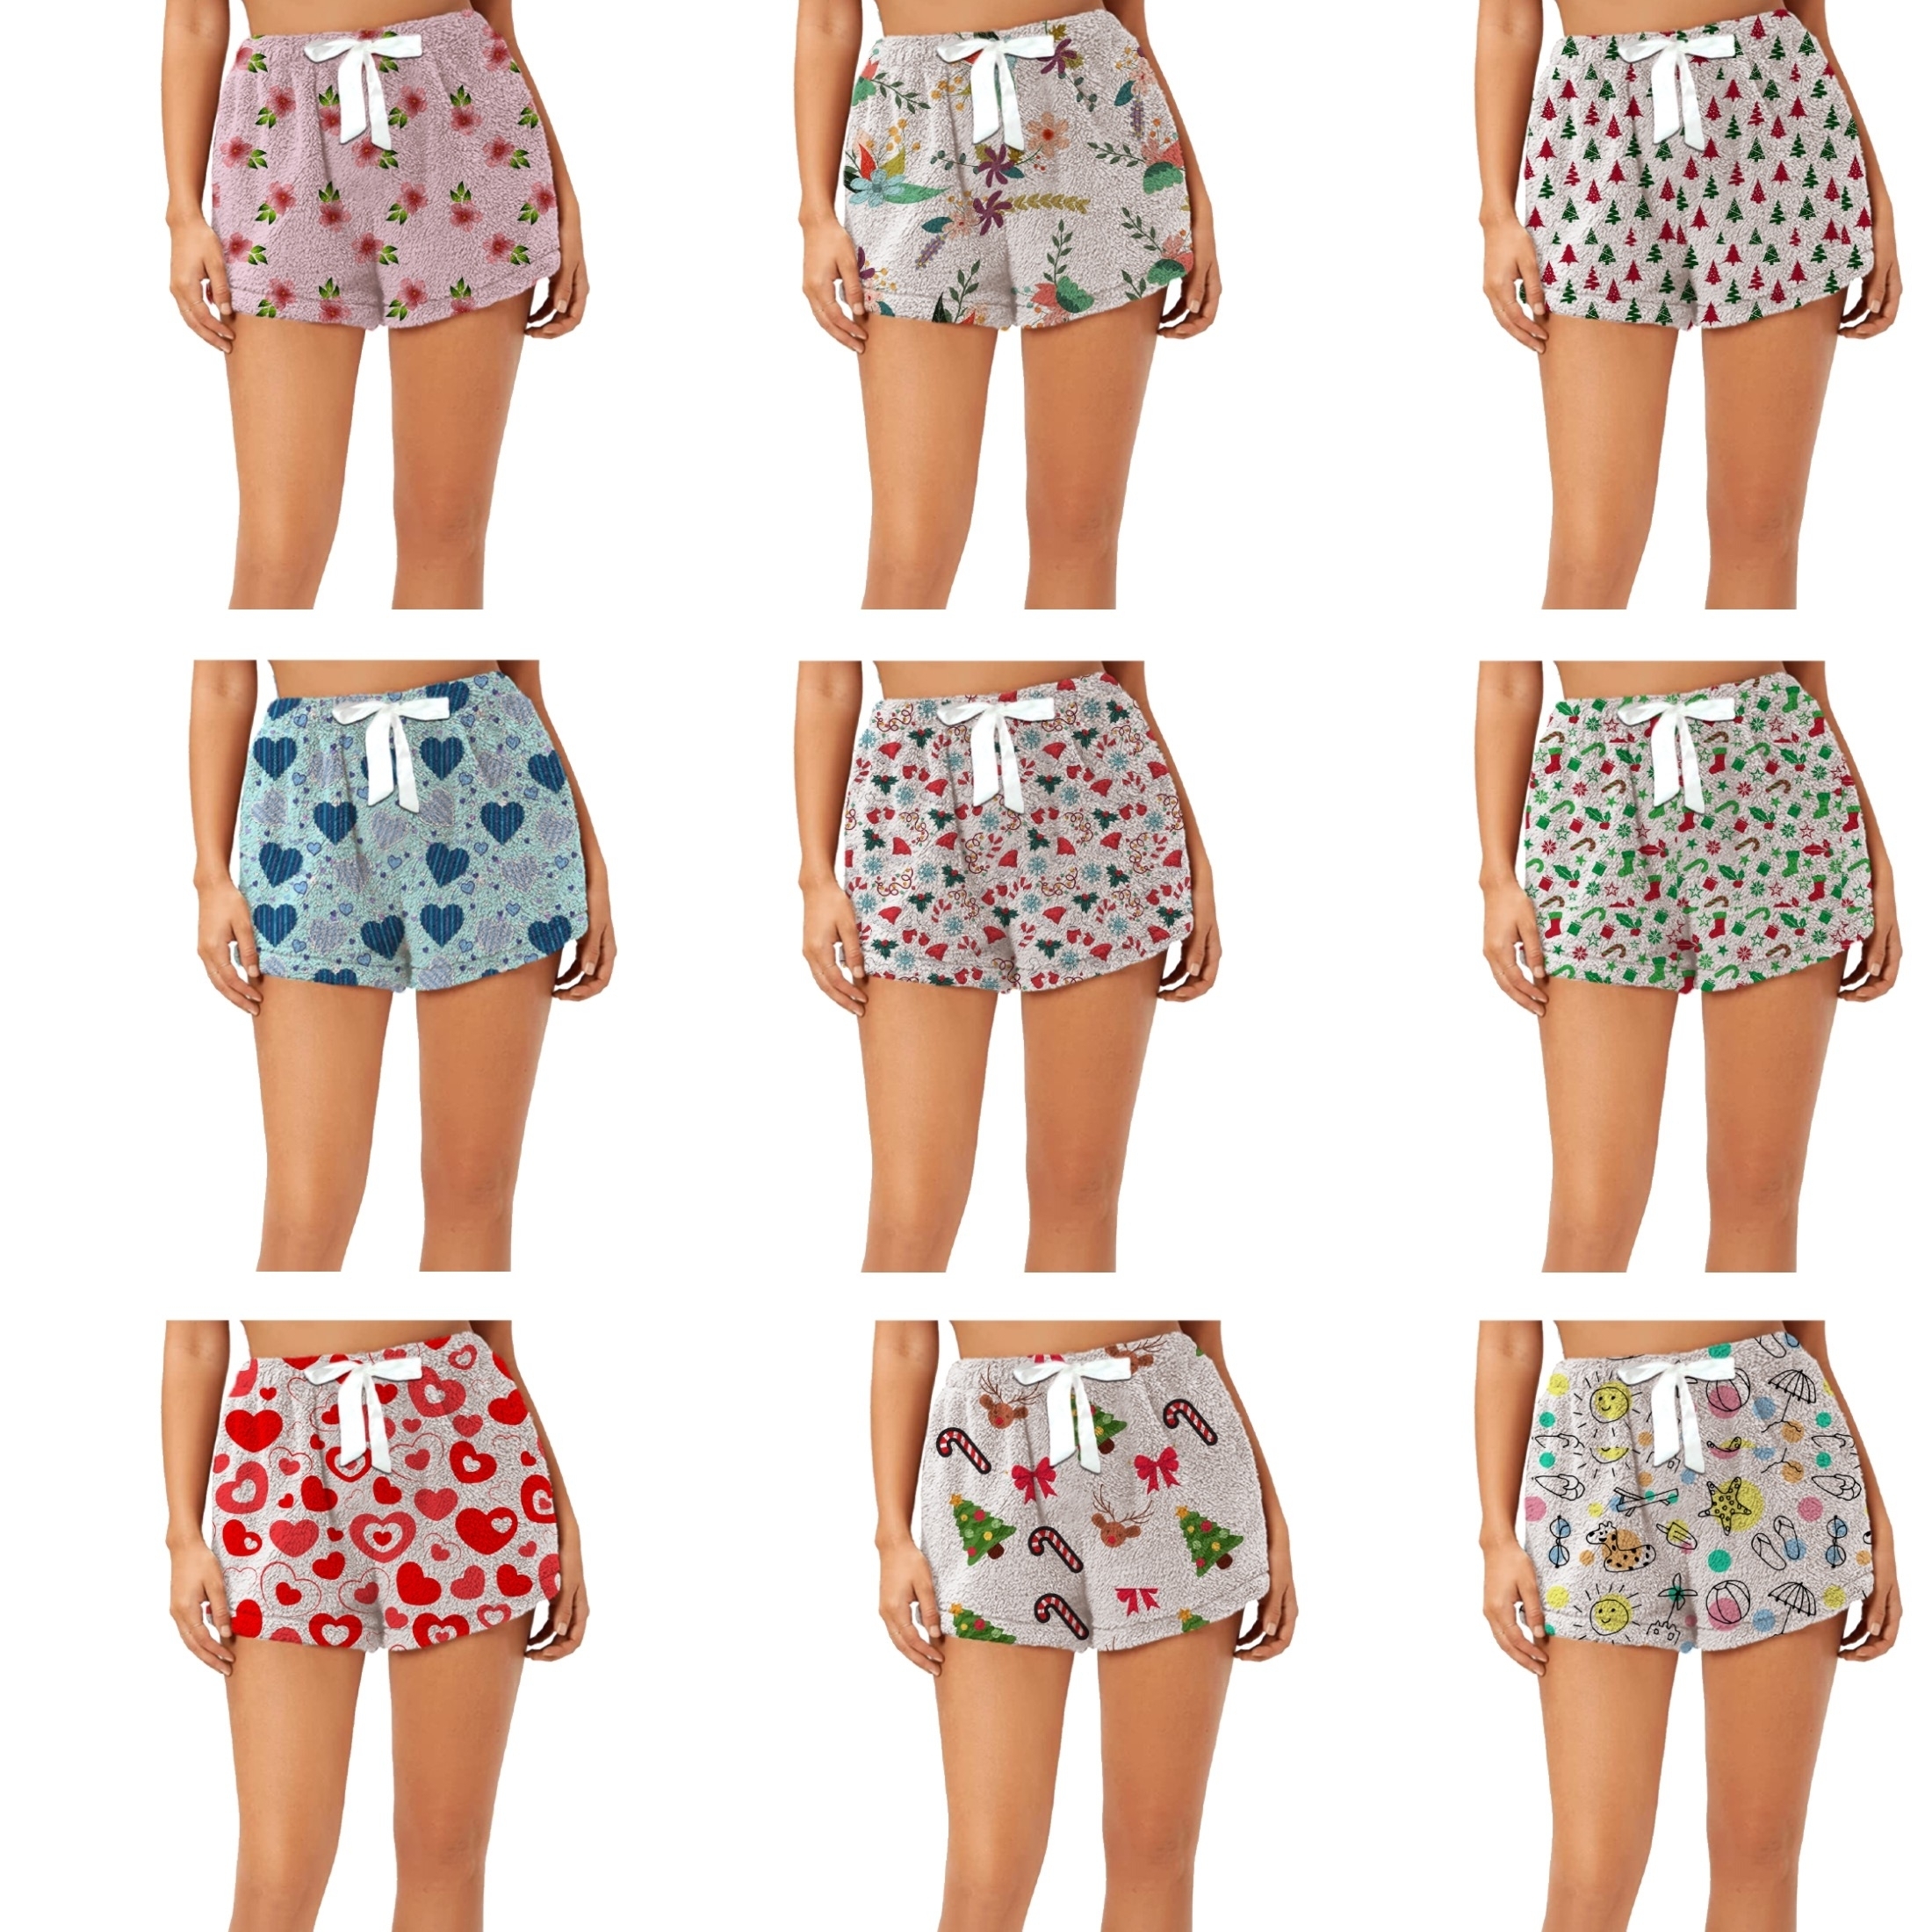 3-Pack: Women's Super Soft Micro Fleece Ultra Plush Printed Pajama Shorts - Large